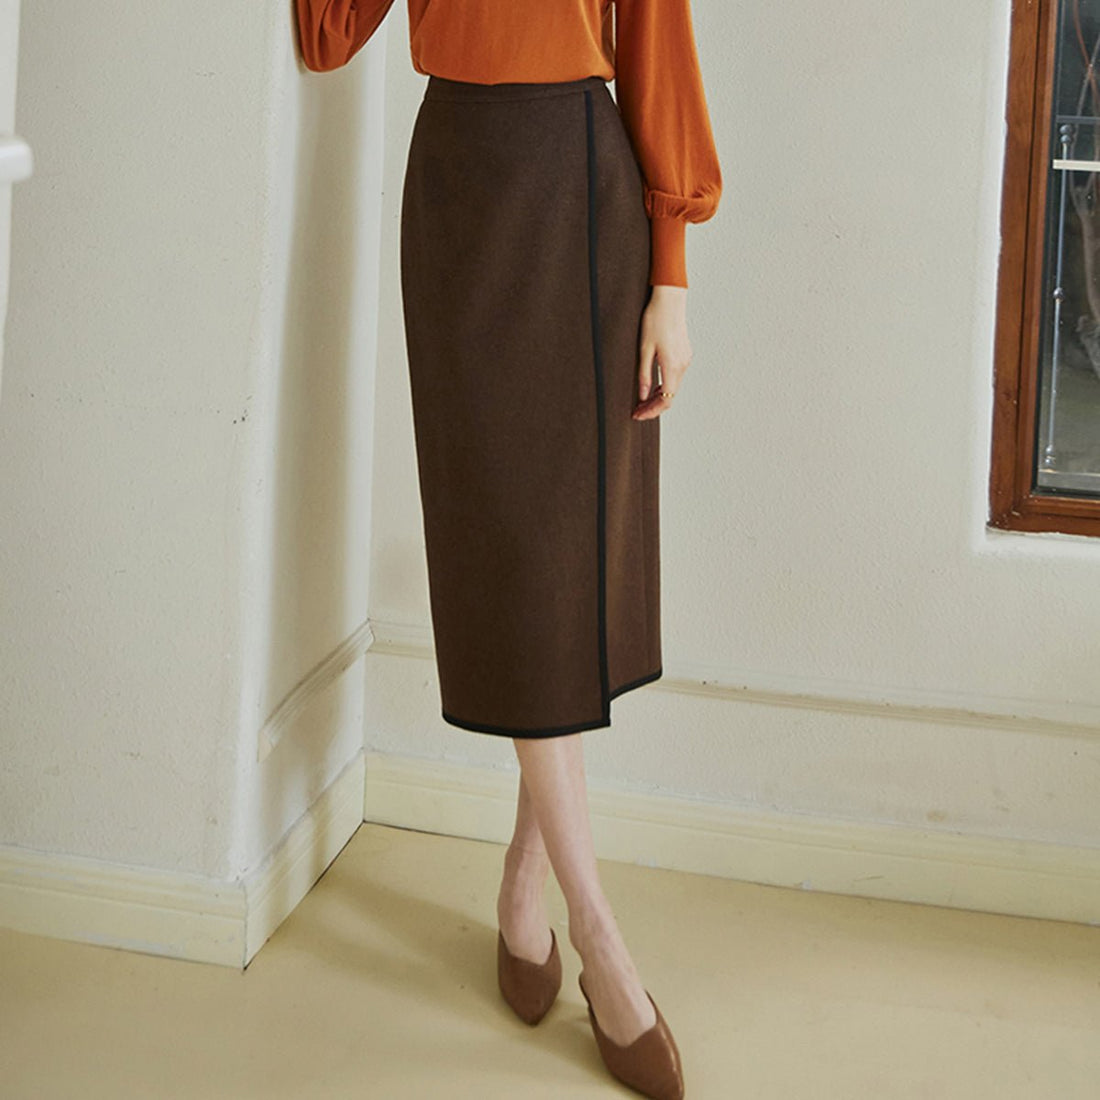 Comfortable Chocolate Brown Pencil Skirt - 0cm